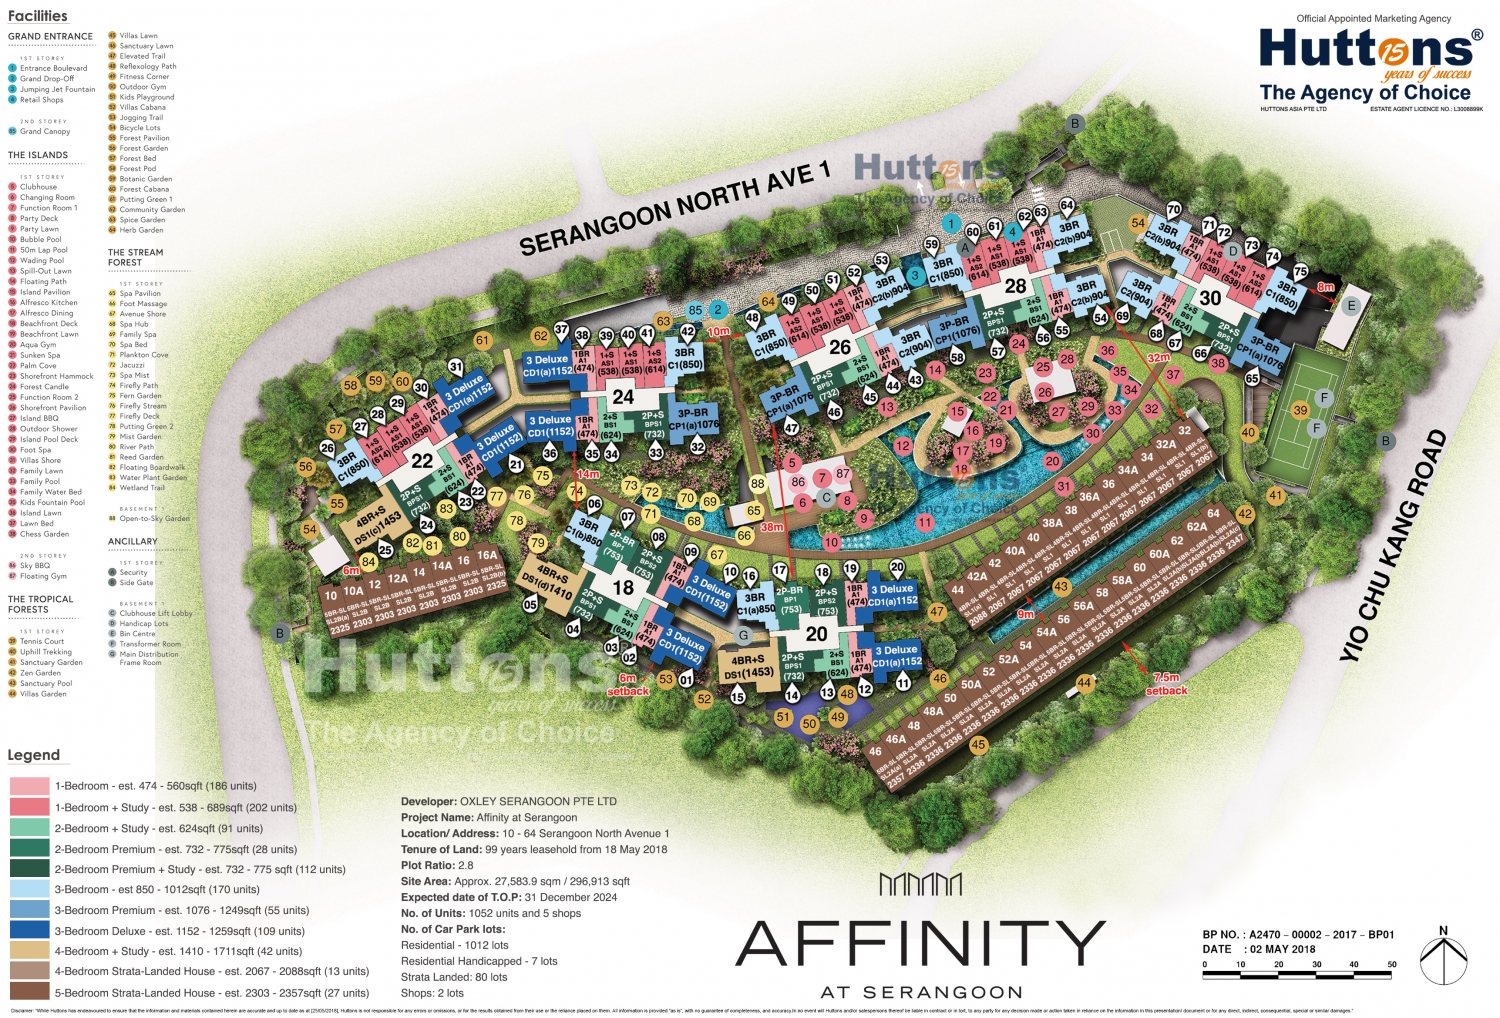 Affinity At Serangoon Site Plan